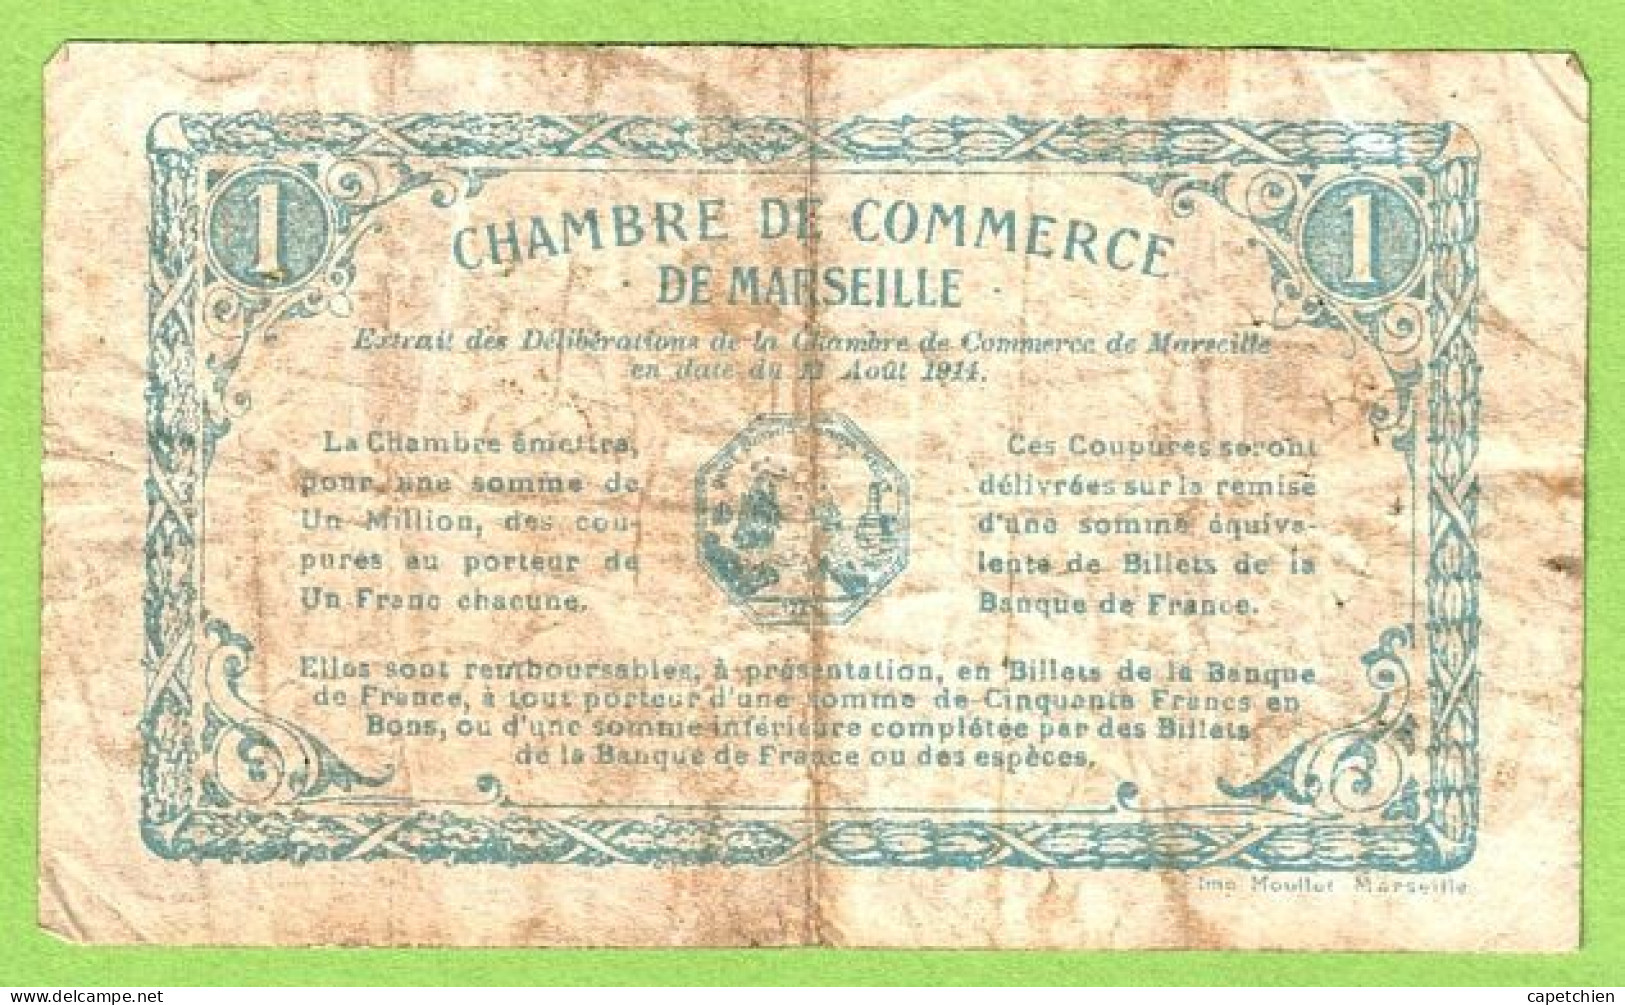 FRANCE / CHAMBRE De COMMERCE / MARSEILLE / 1 FRANC / 13 AOUT 1914 / N° 97921 / SERIE E - Handelskammer